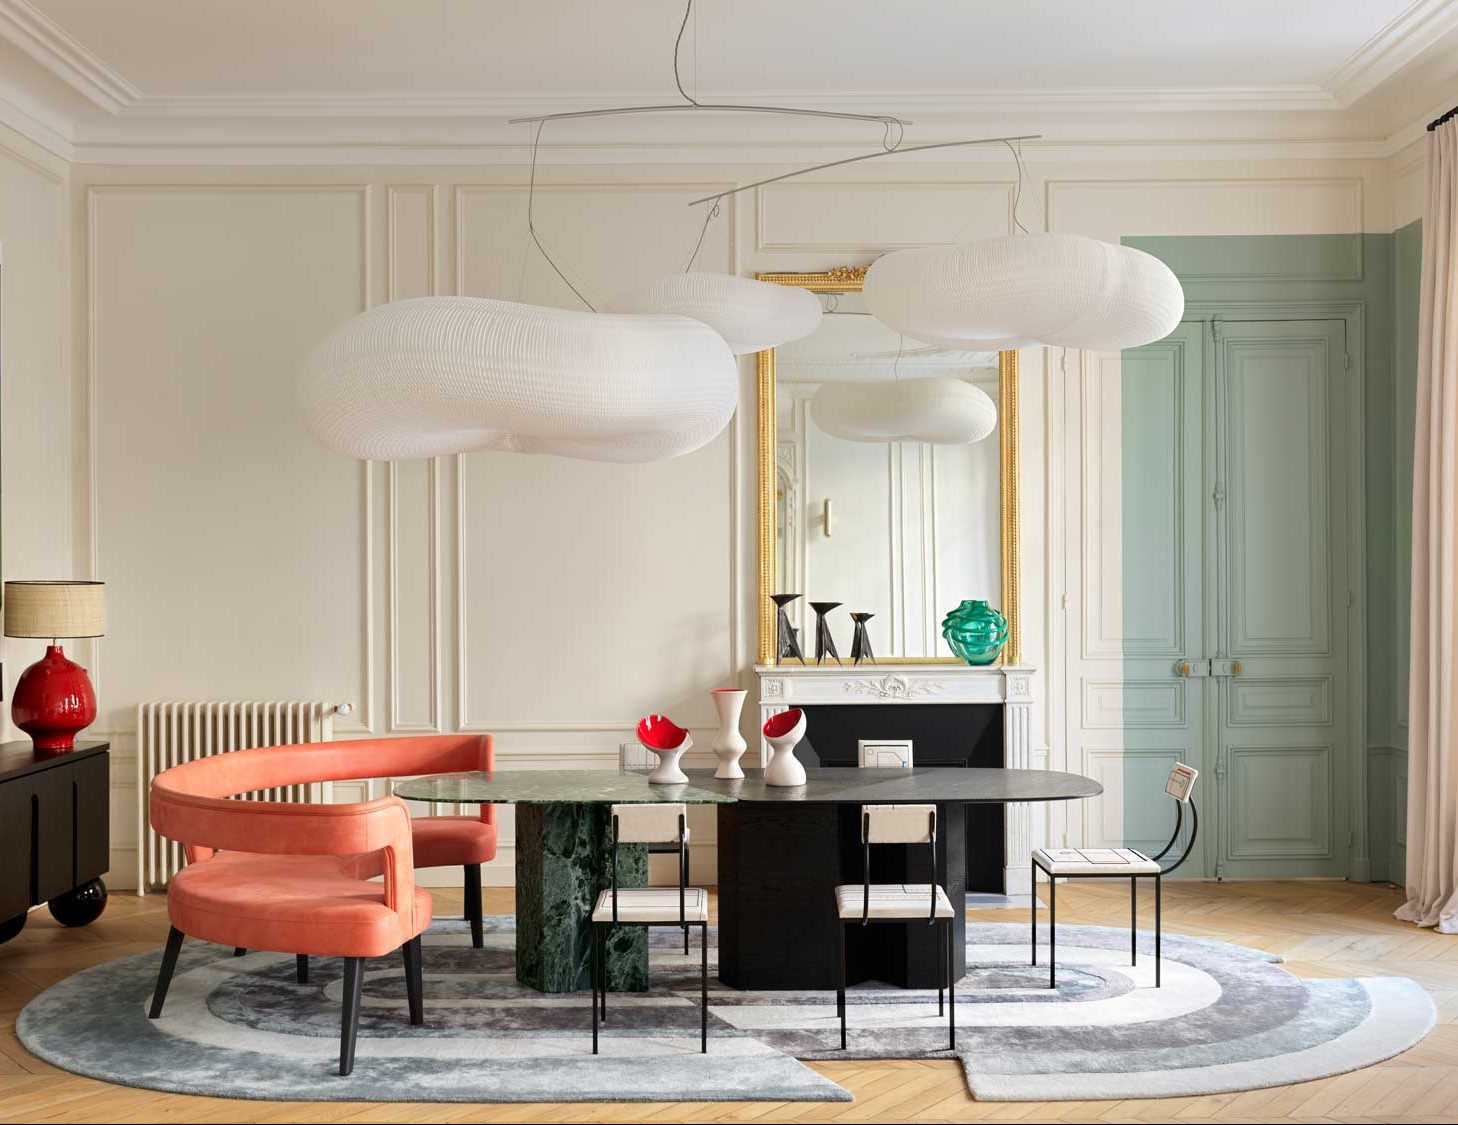 Le Berre Vevaud: kluges Interiordesign aus der eigenen Galerie in Paris